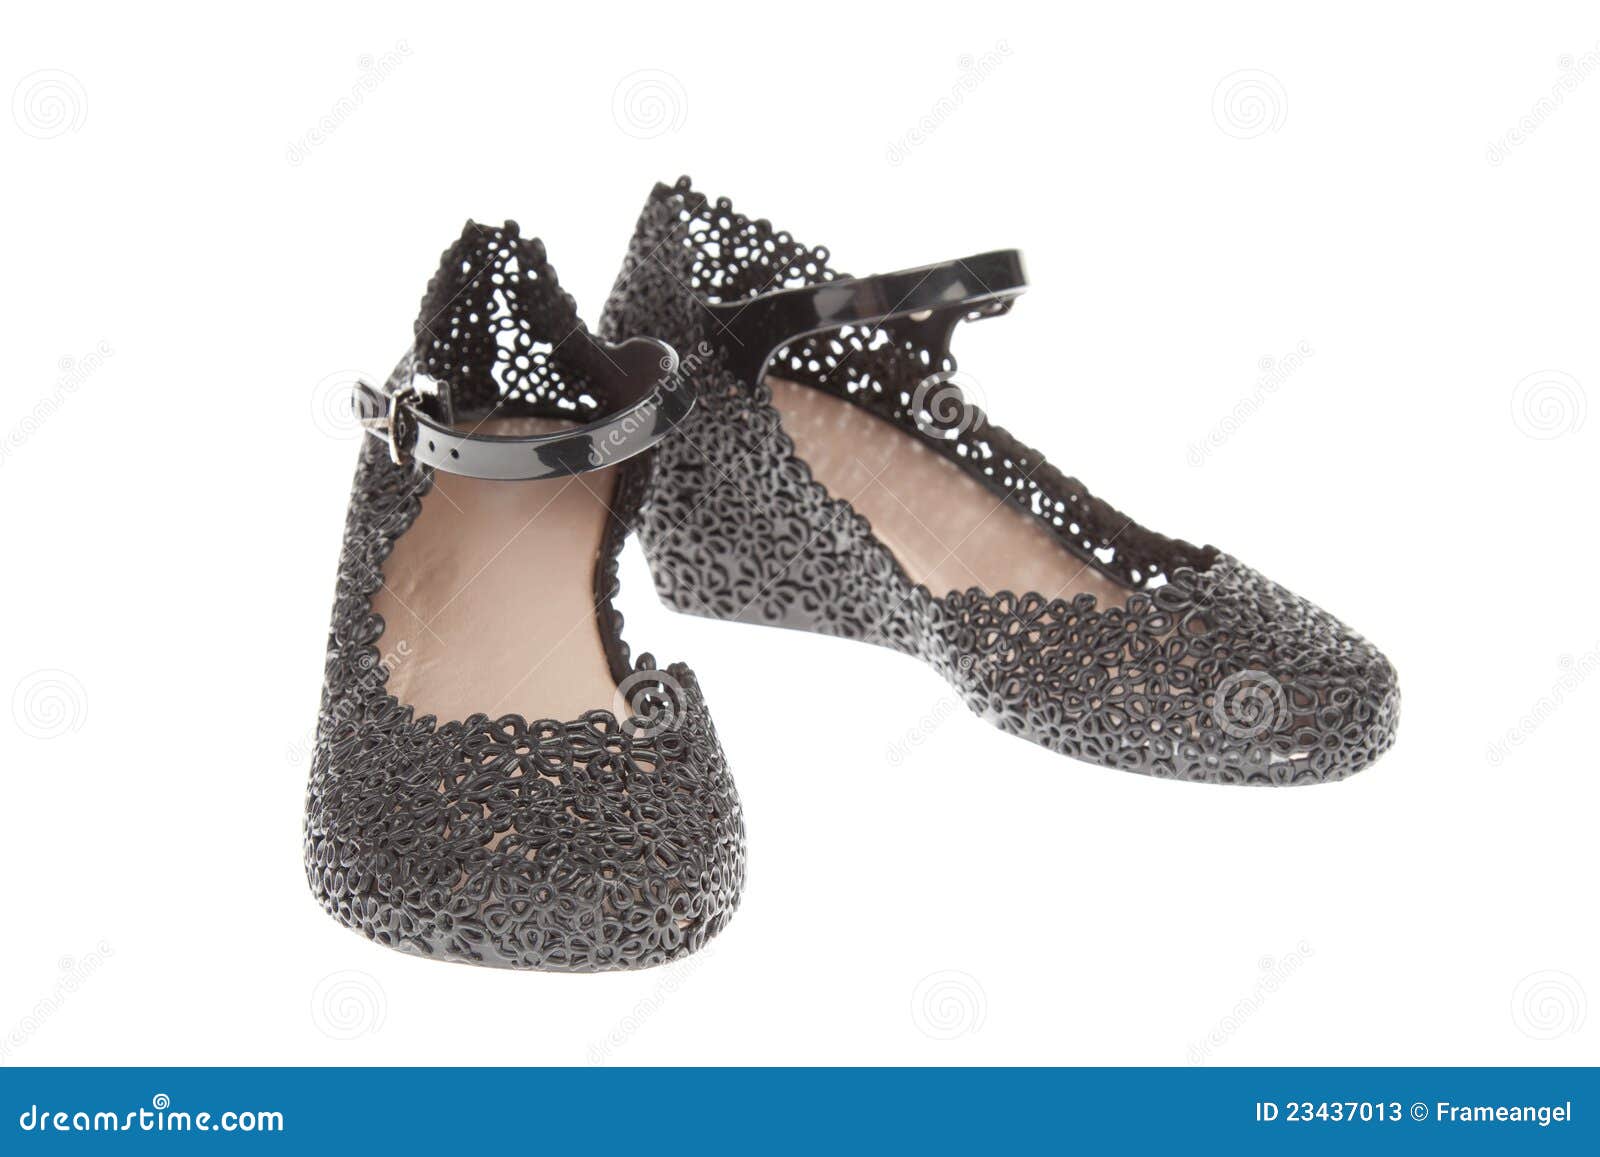 Pair of Black Rubber Platform Shoes Stock Image - Image of footwear ...